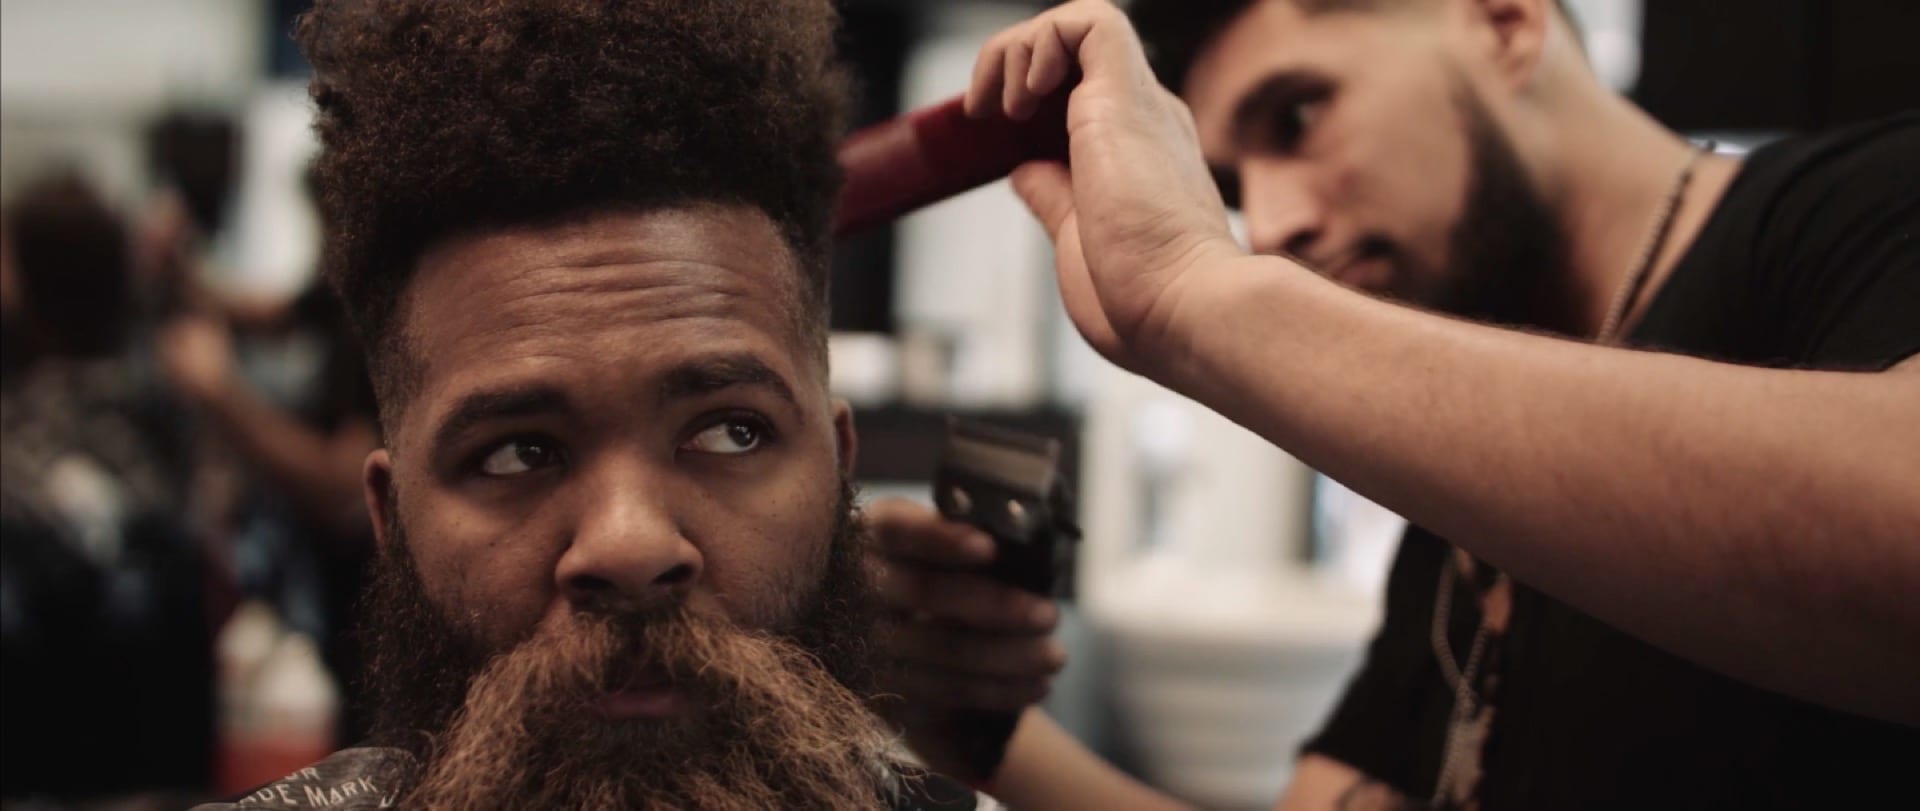 Brandon Baker Beard Project African American man getting hair cut by a barber